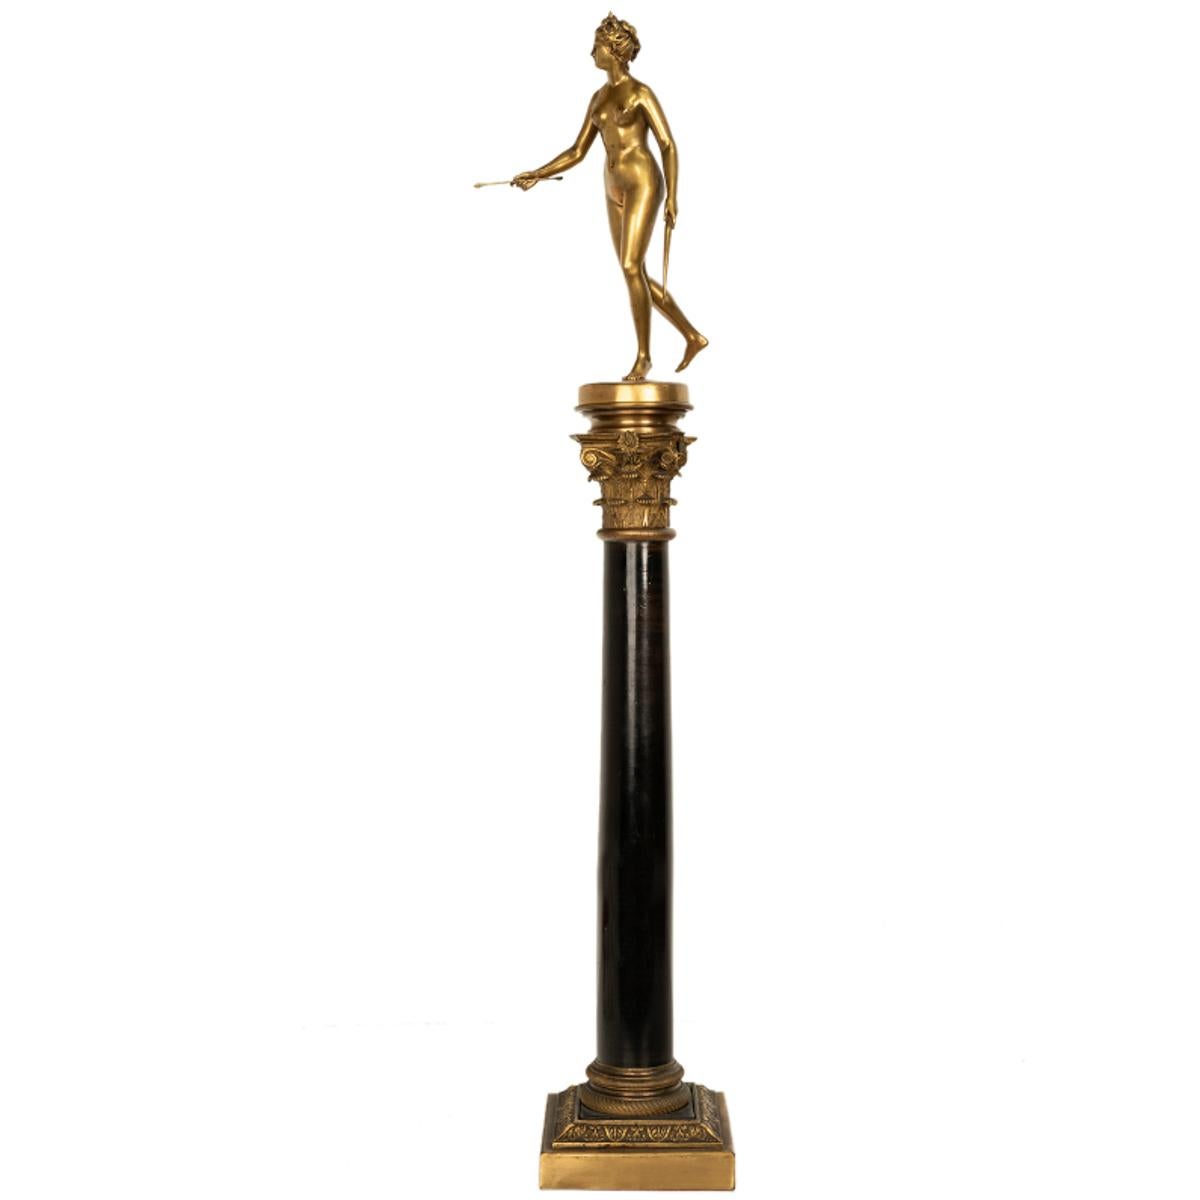 Ferdinand Barbedienne Figurative Sculpture - Antique French Grand Tour Gilt Bronze Statue on Column Diana the Huntress 1838